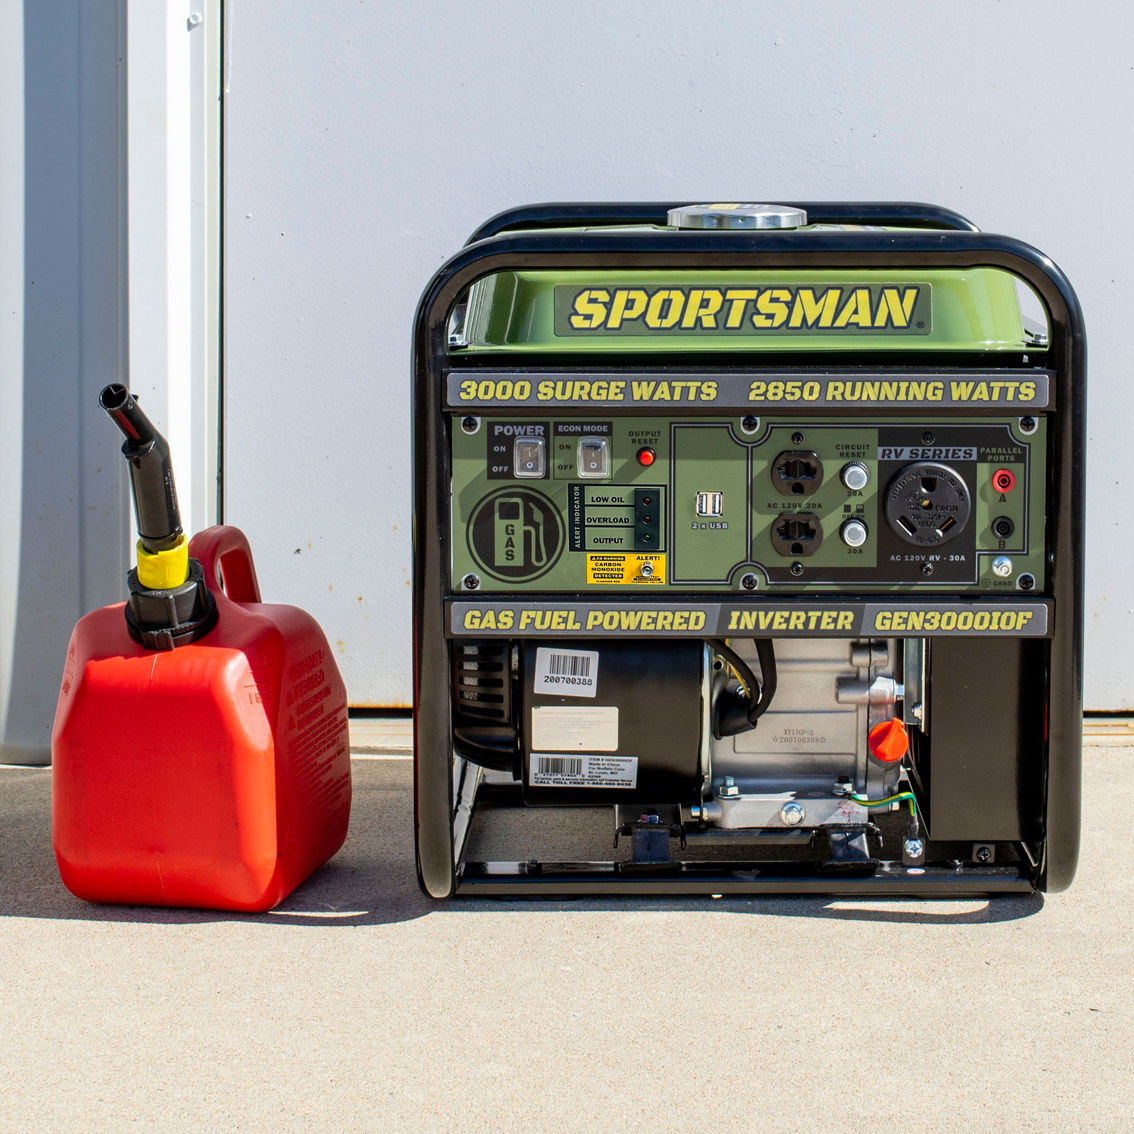 Sportsman 3000 Surge Watts Open Frame Portable Gasoline Inverter Generator - Image 5 of 8